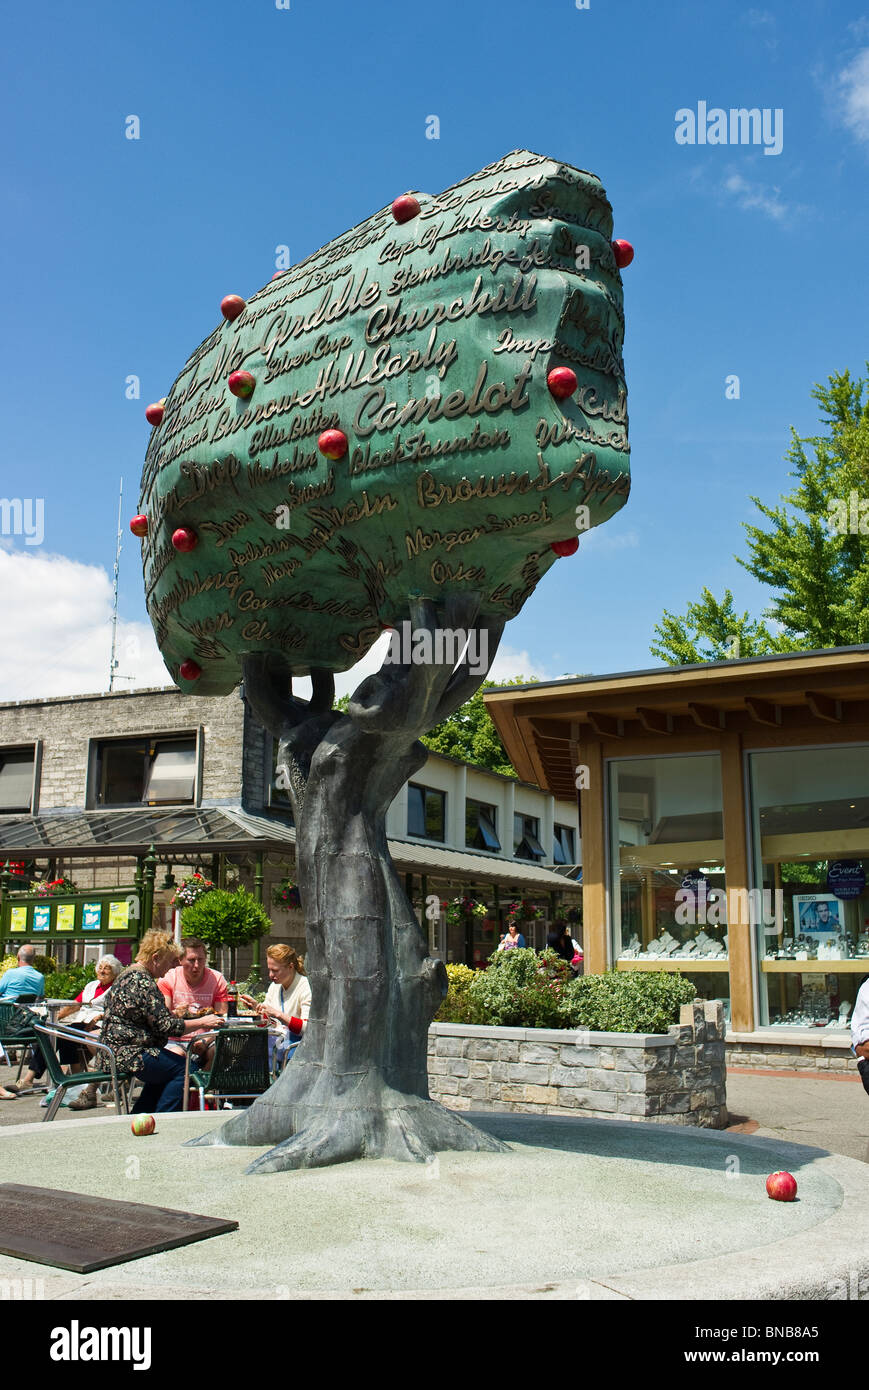 Modern tree sculpture celebrating many old names of Somerset cider apples Stock Photo